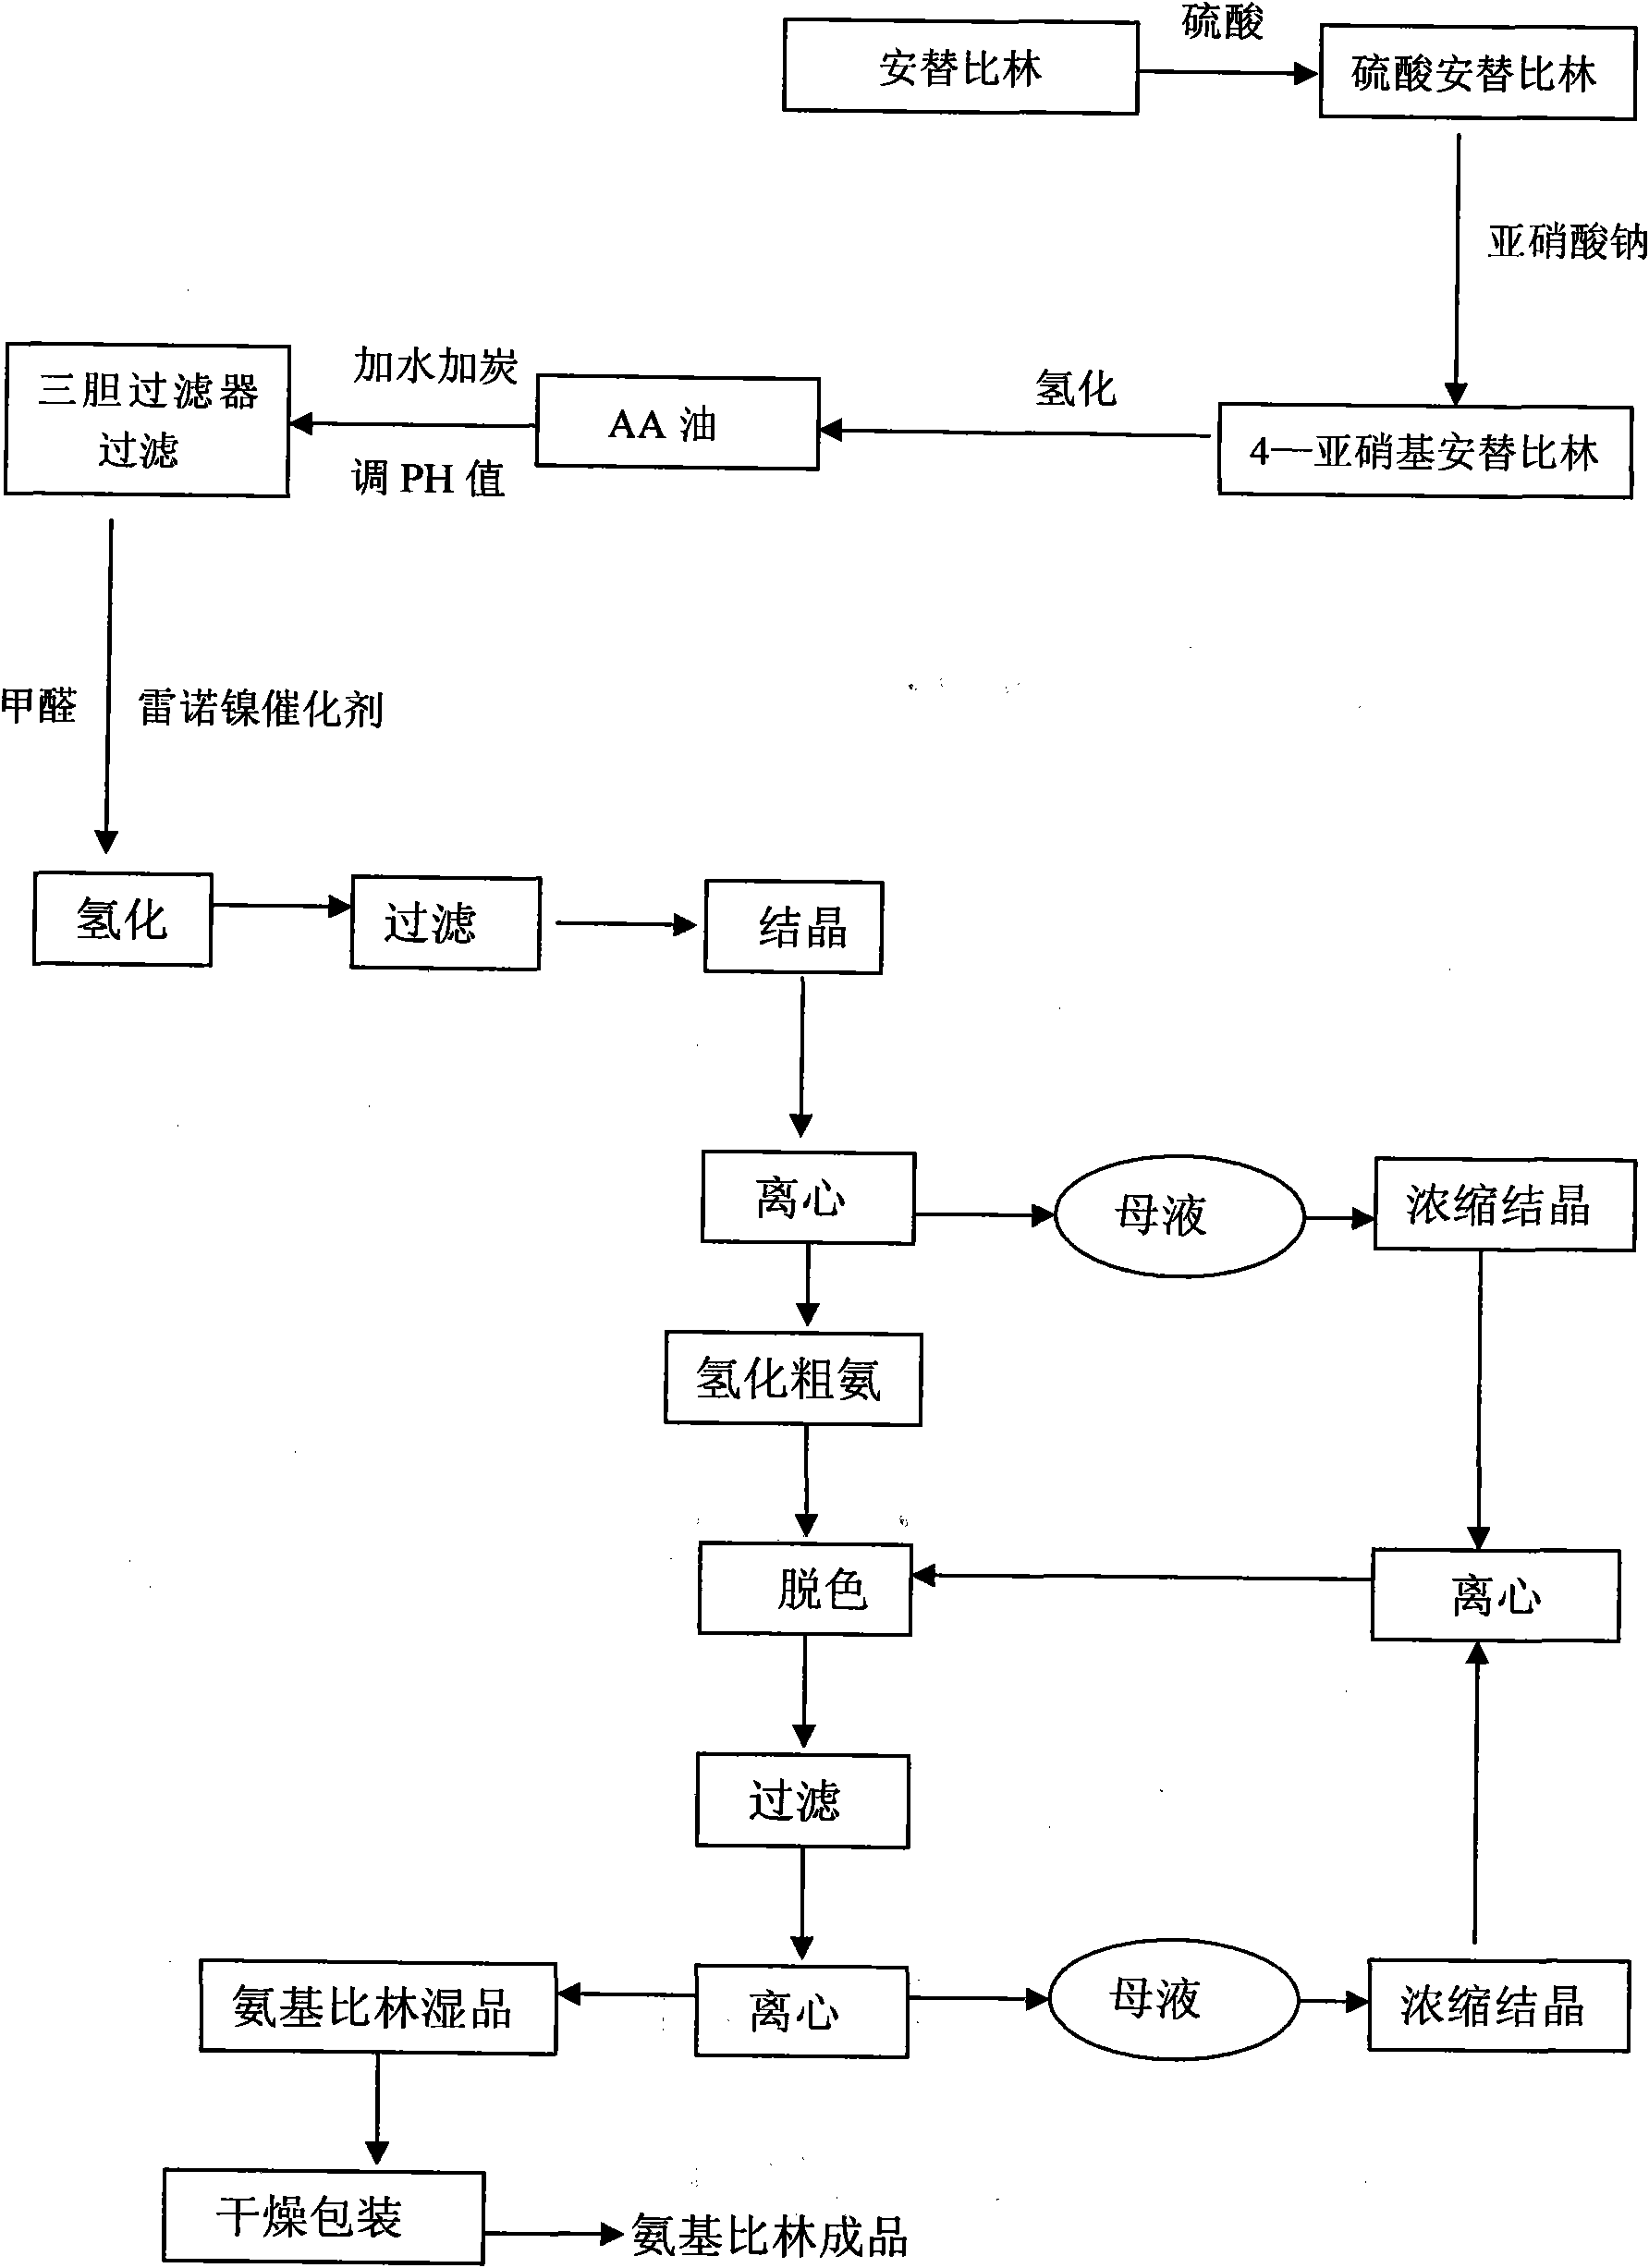 Aminopyrine production method